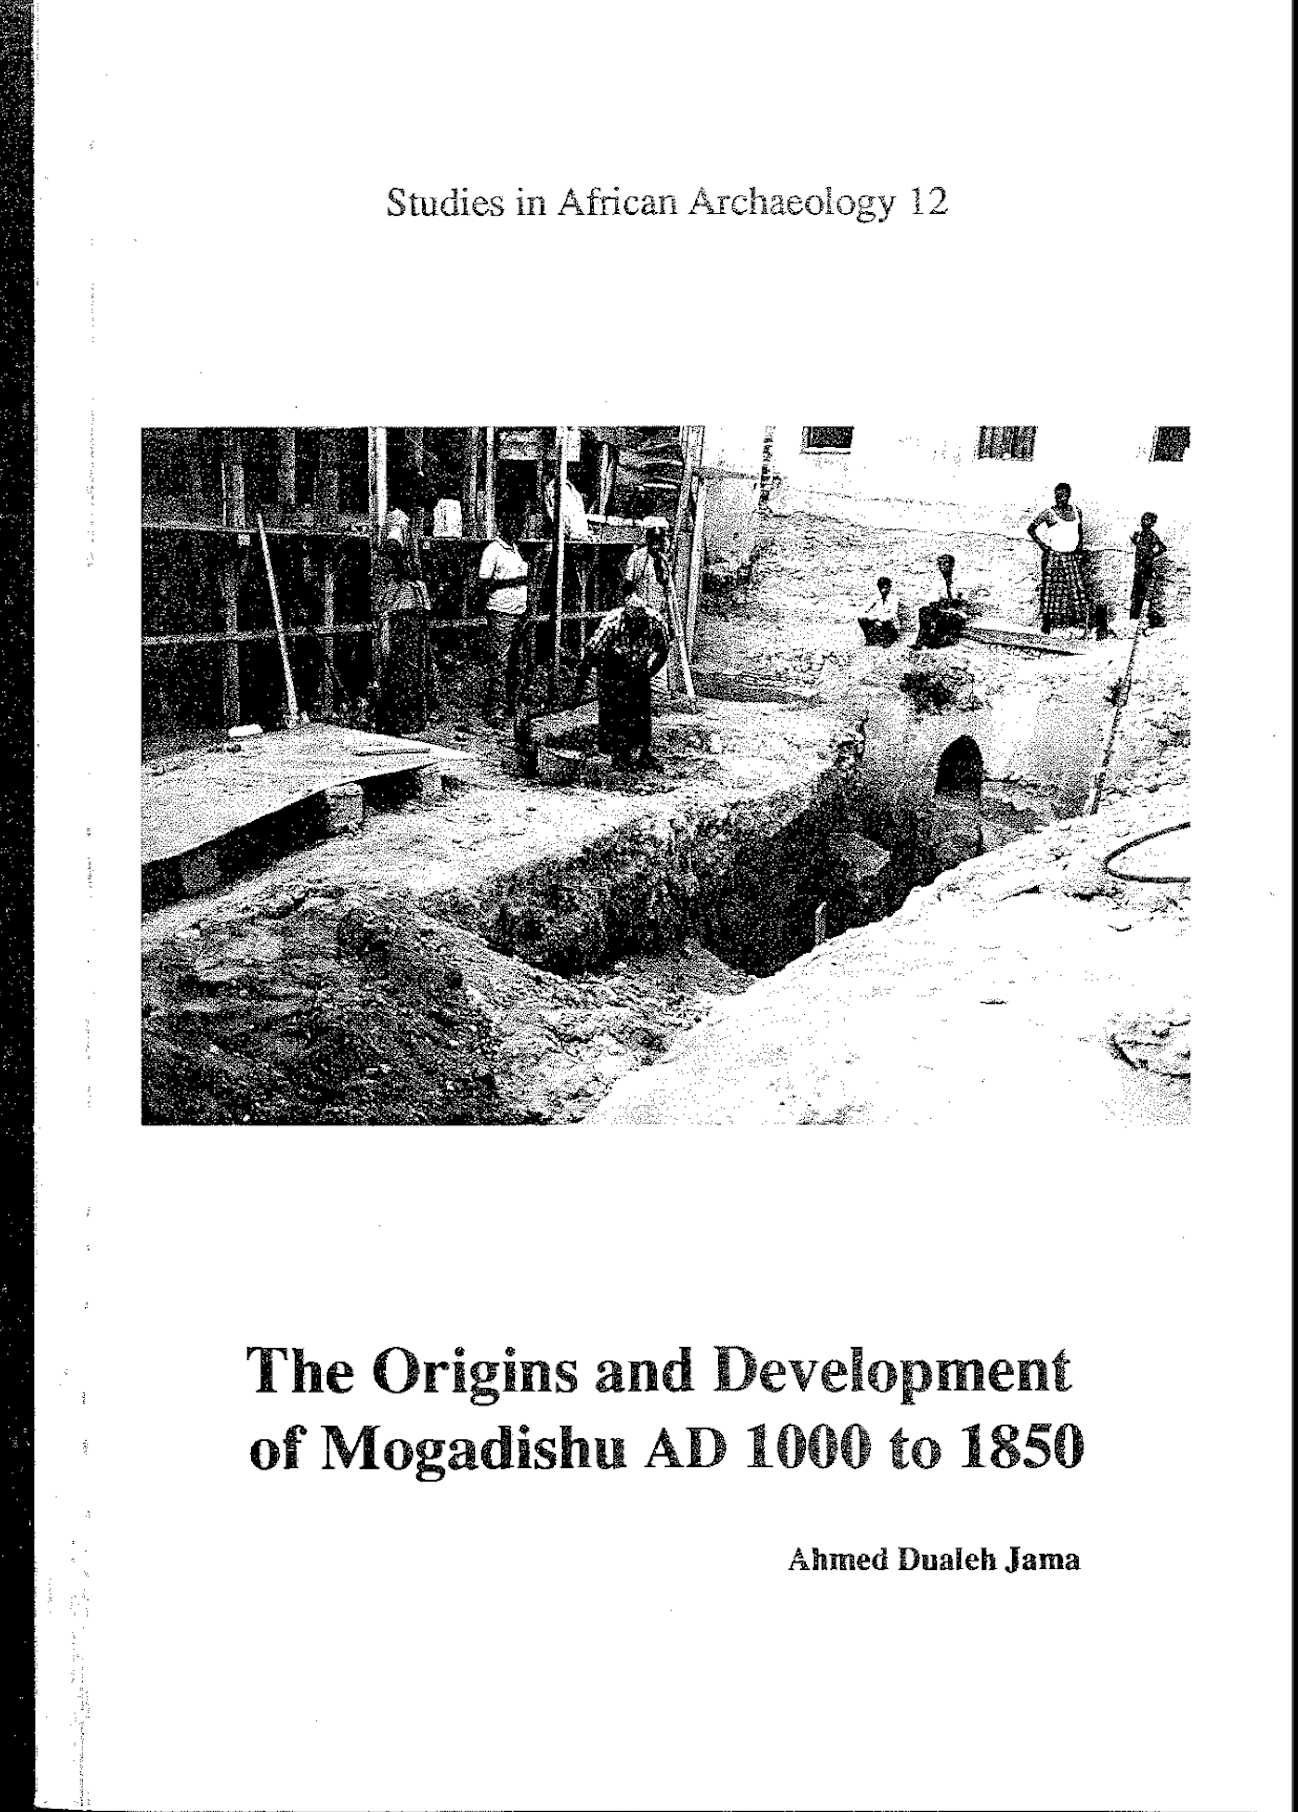 The Origins and Development of Mogadishu AD 1000 to 1850